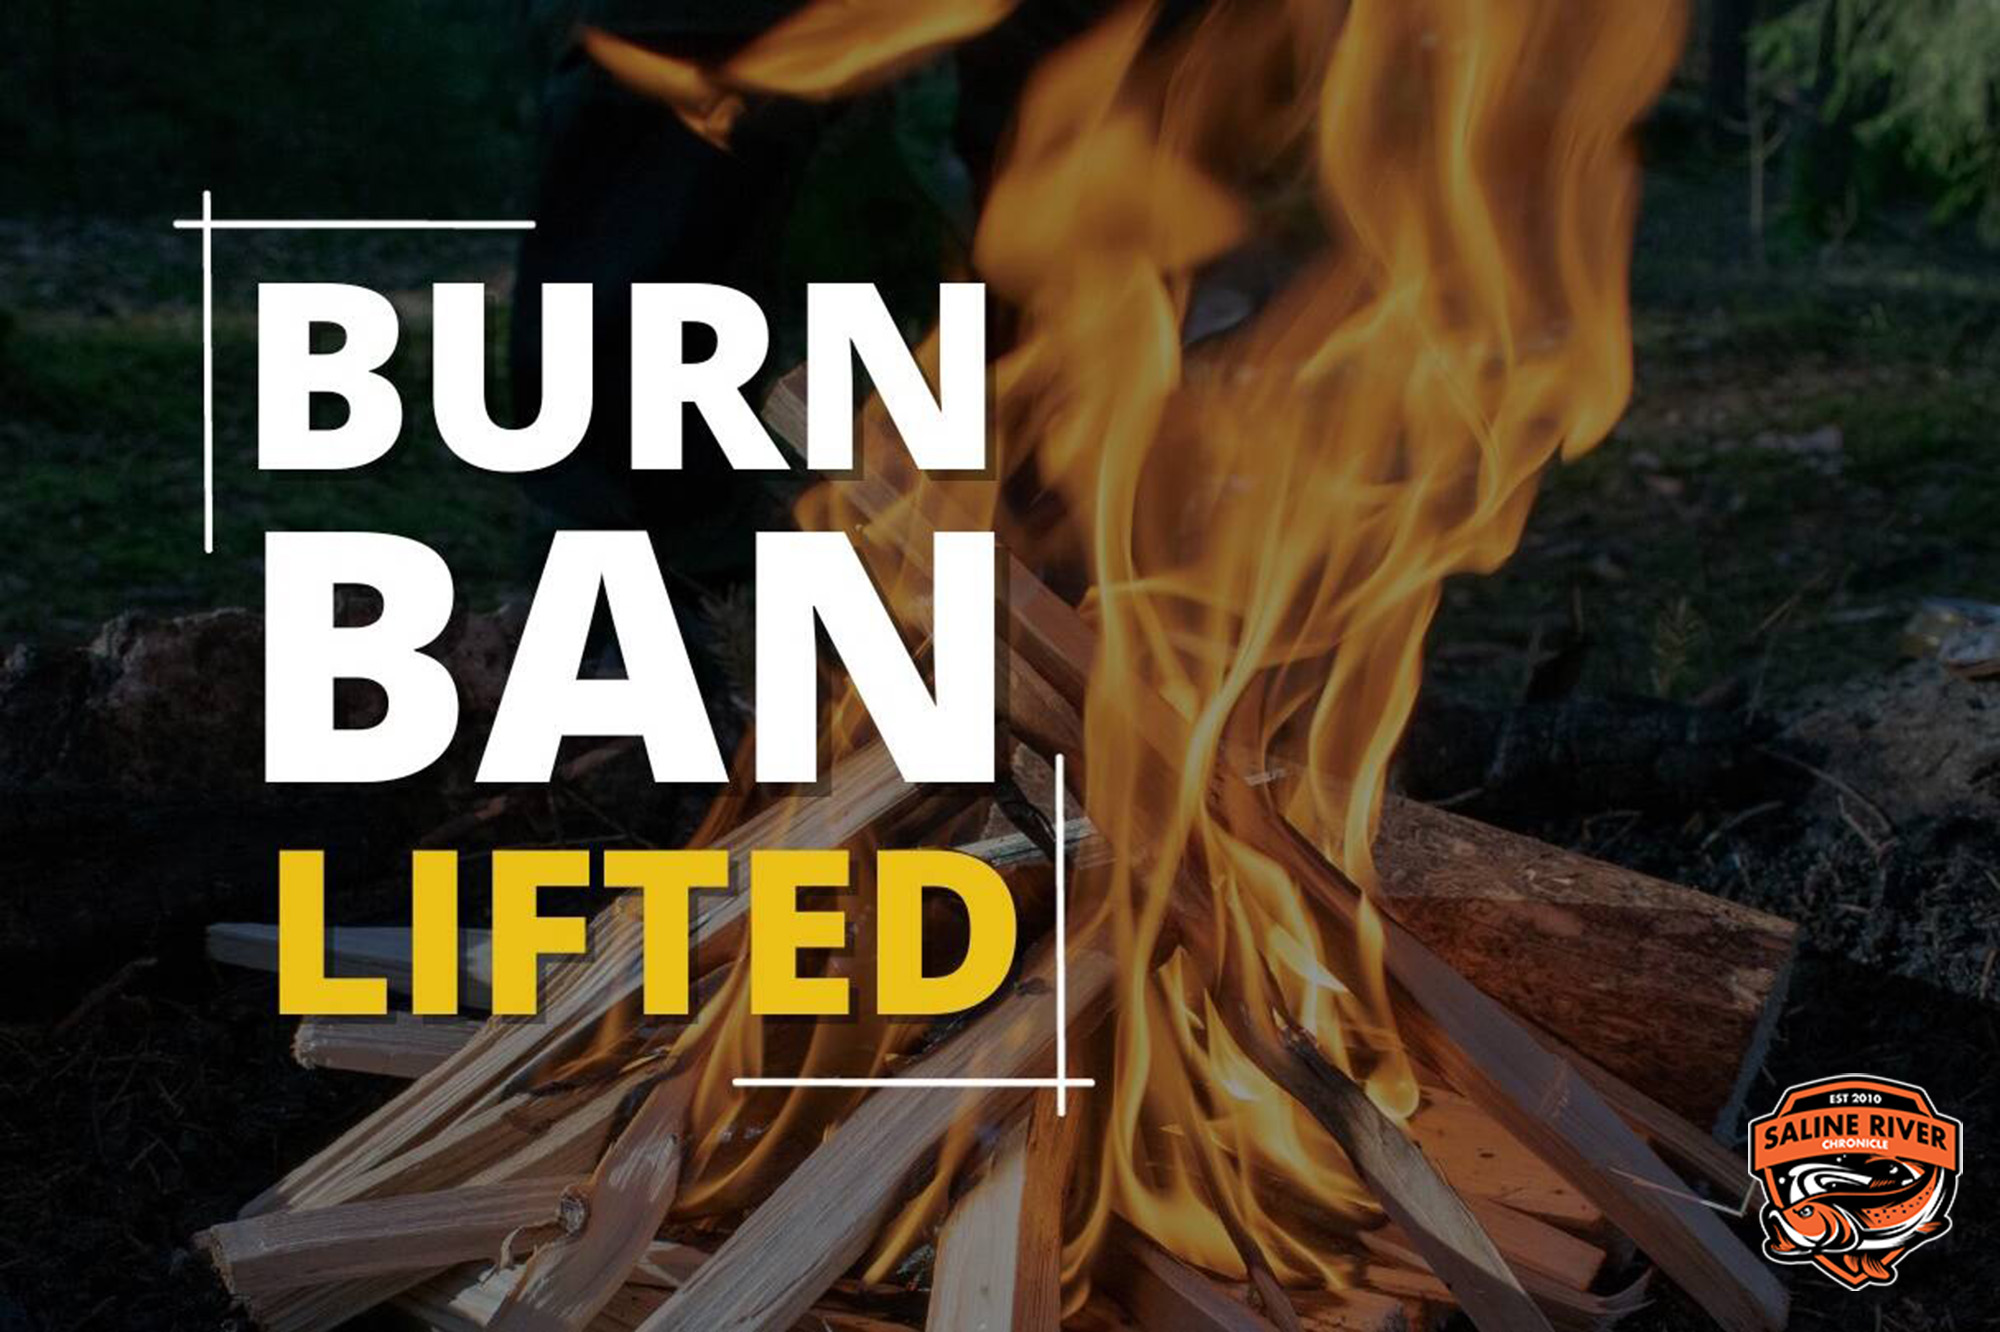 Bradley County burn ban lifted